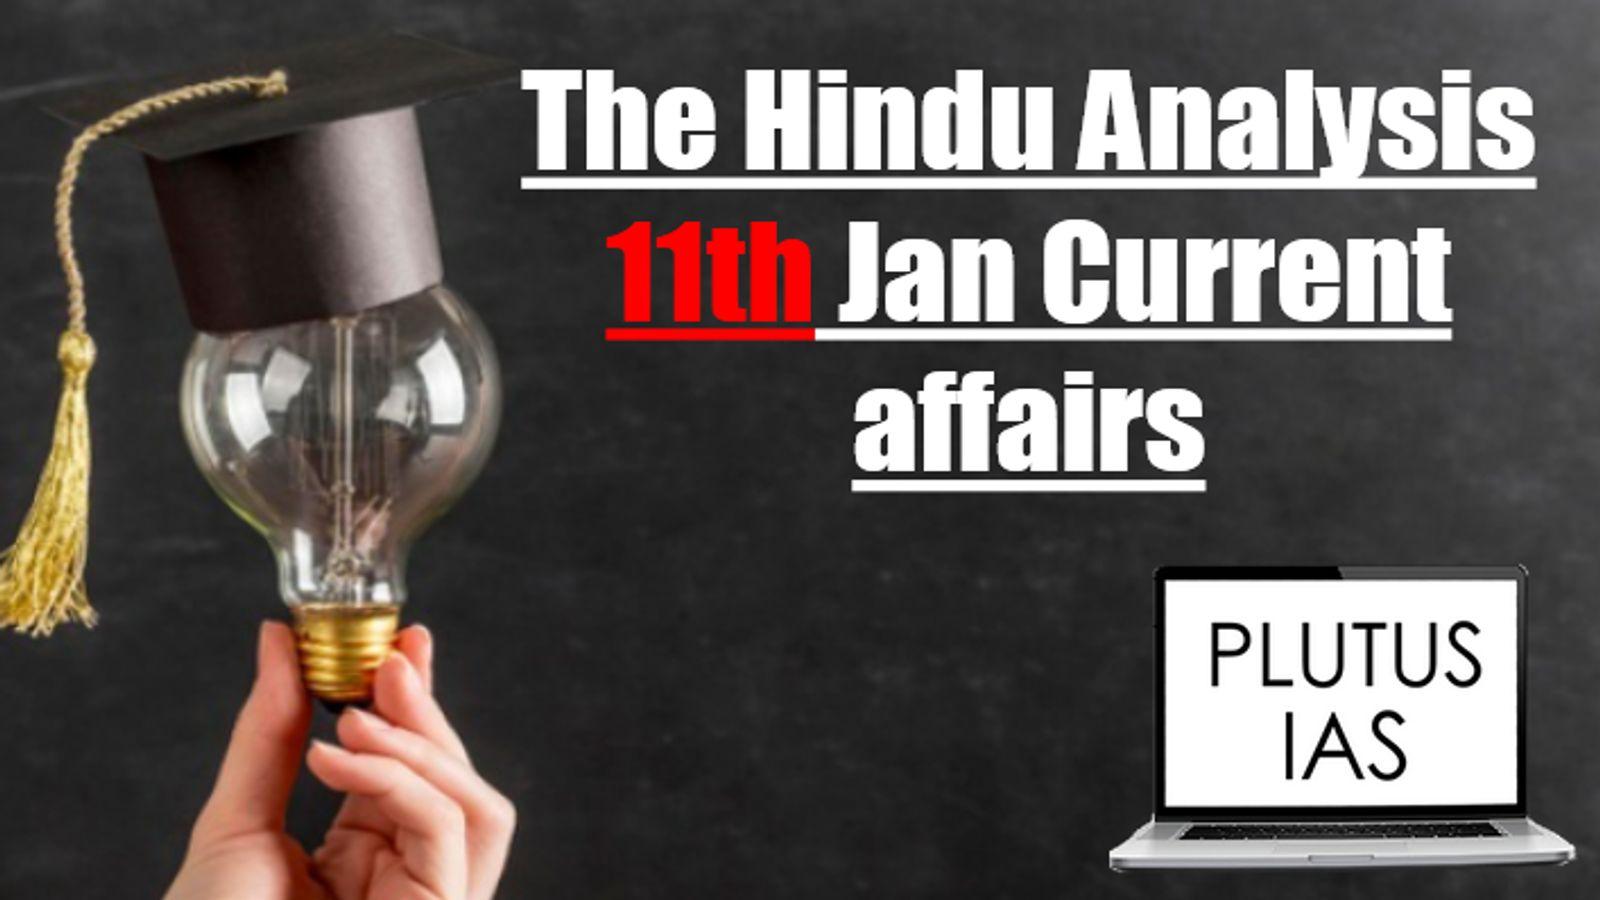 The Hindu Analysis 11th December